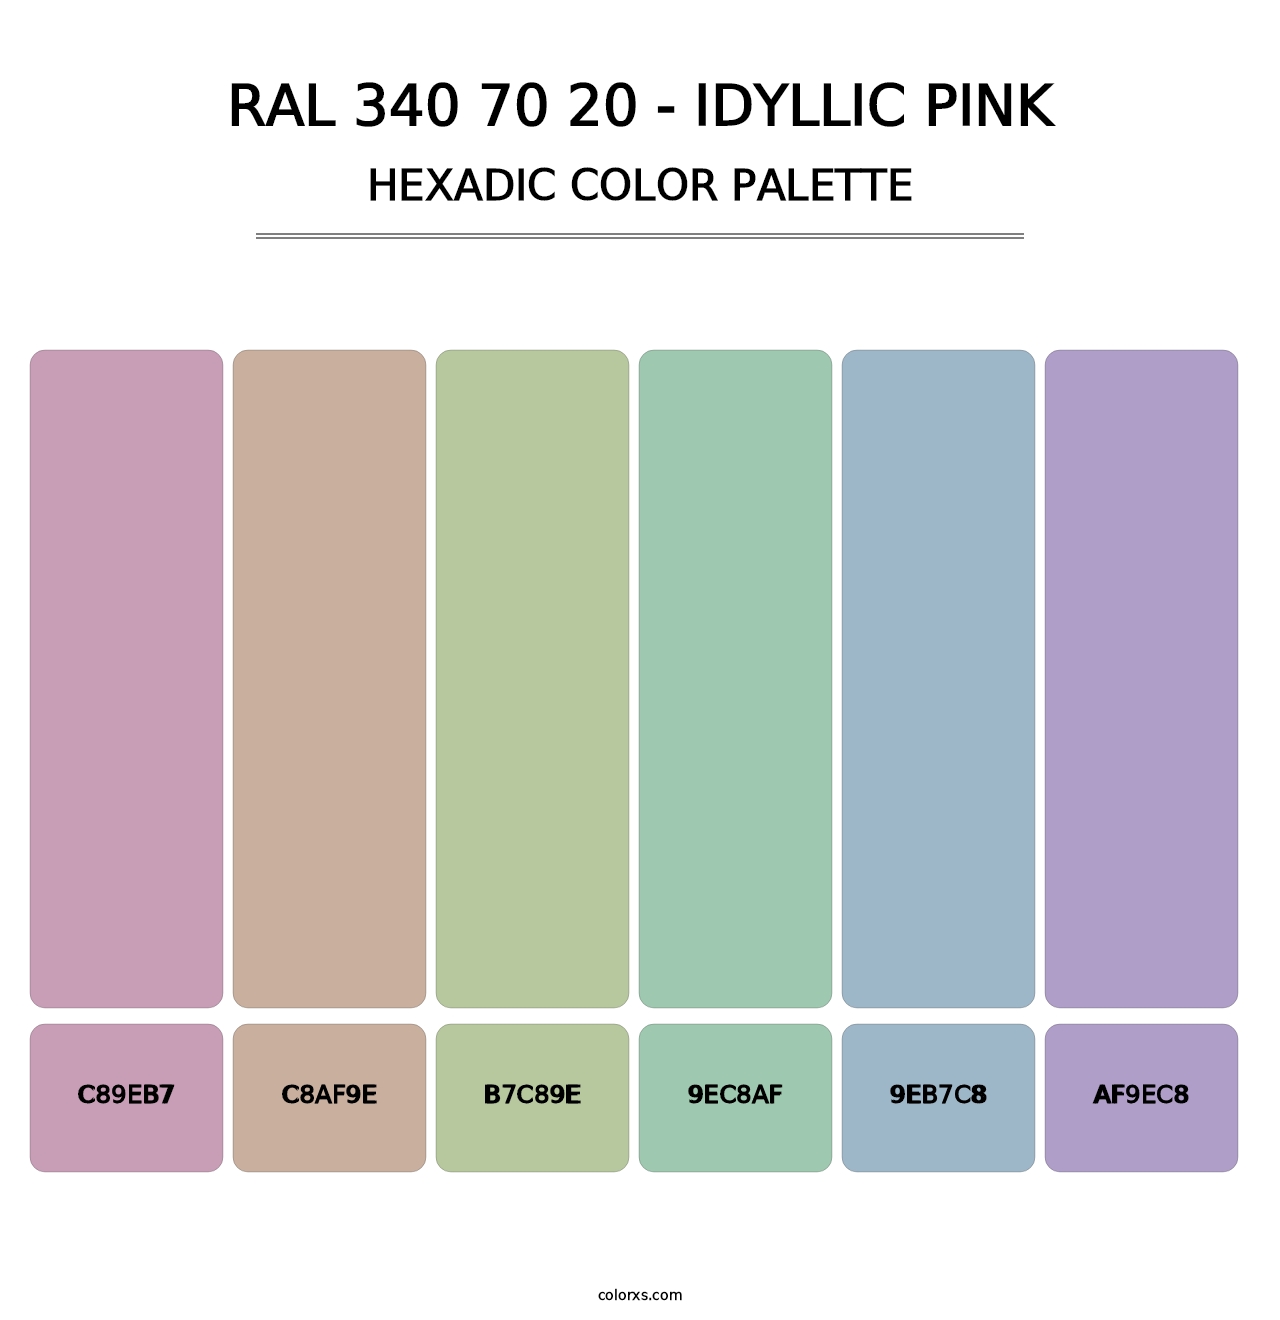 RAL 340 70 20 - Idyllic Pink - Hexadic Color Palette